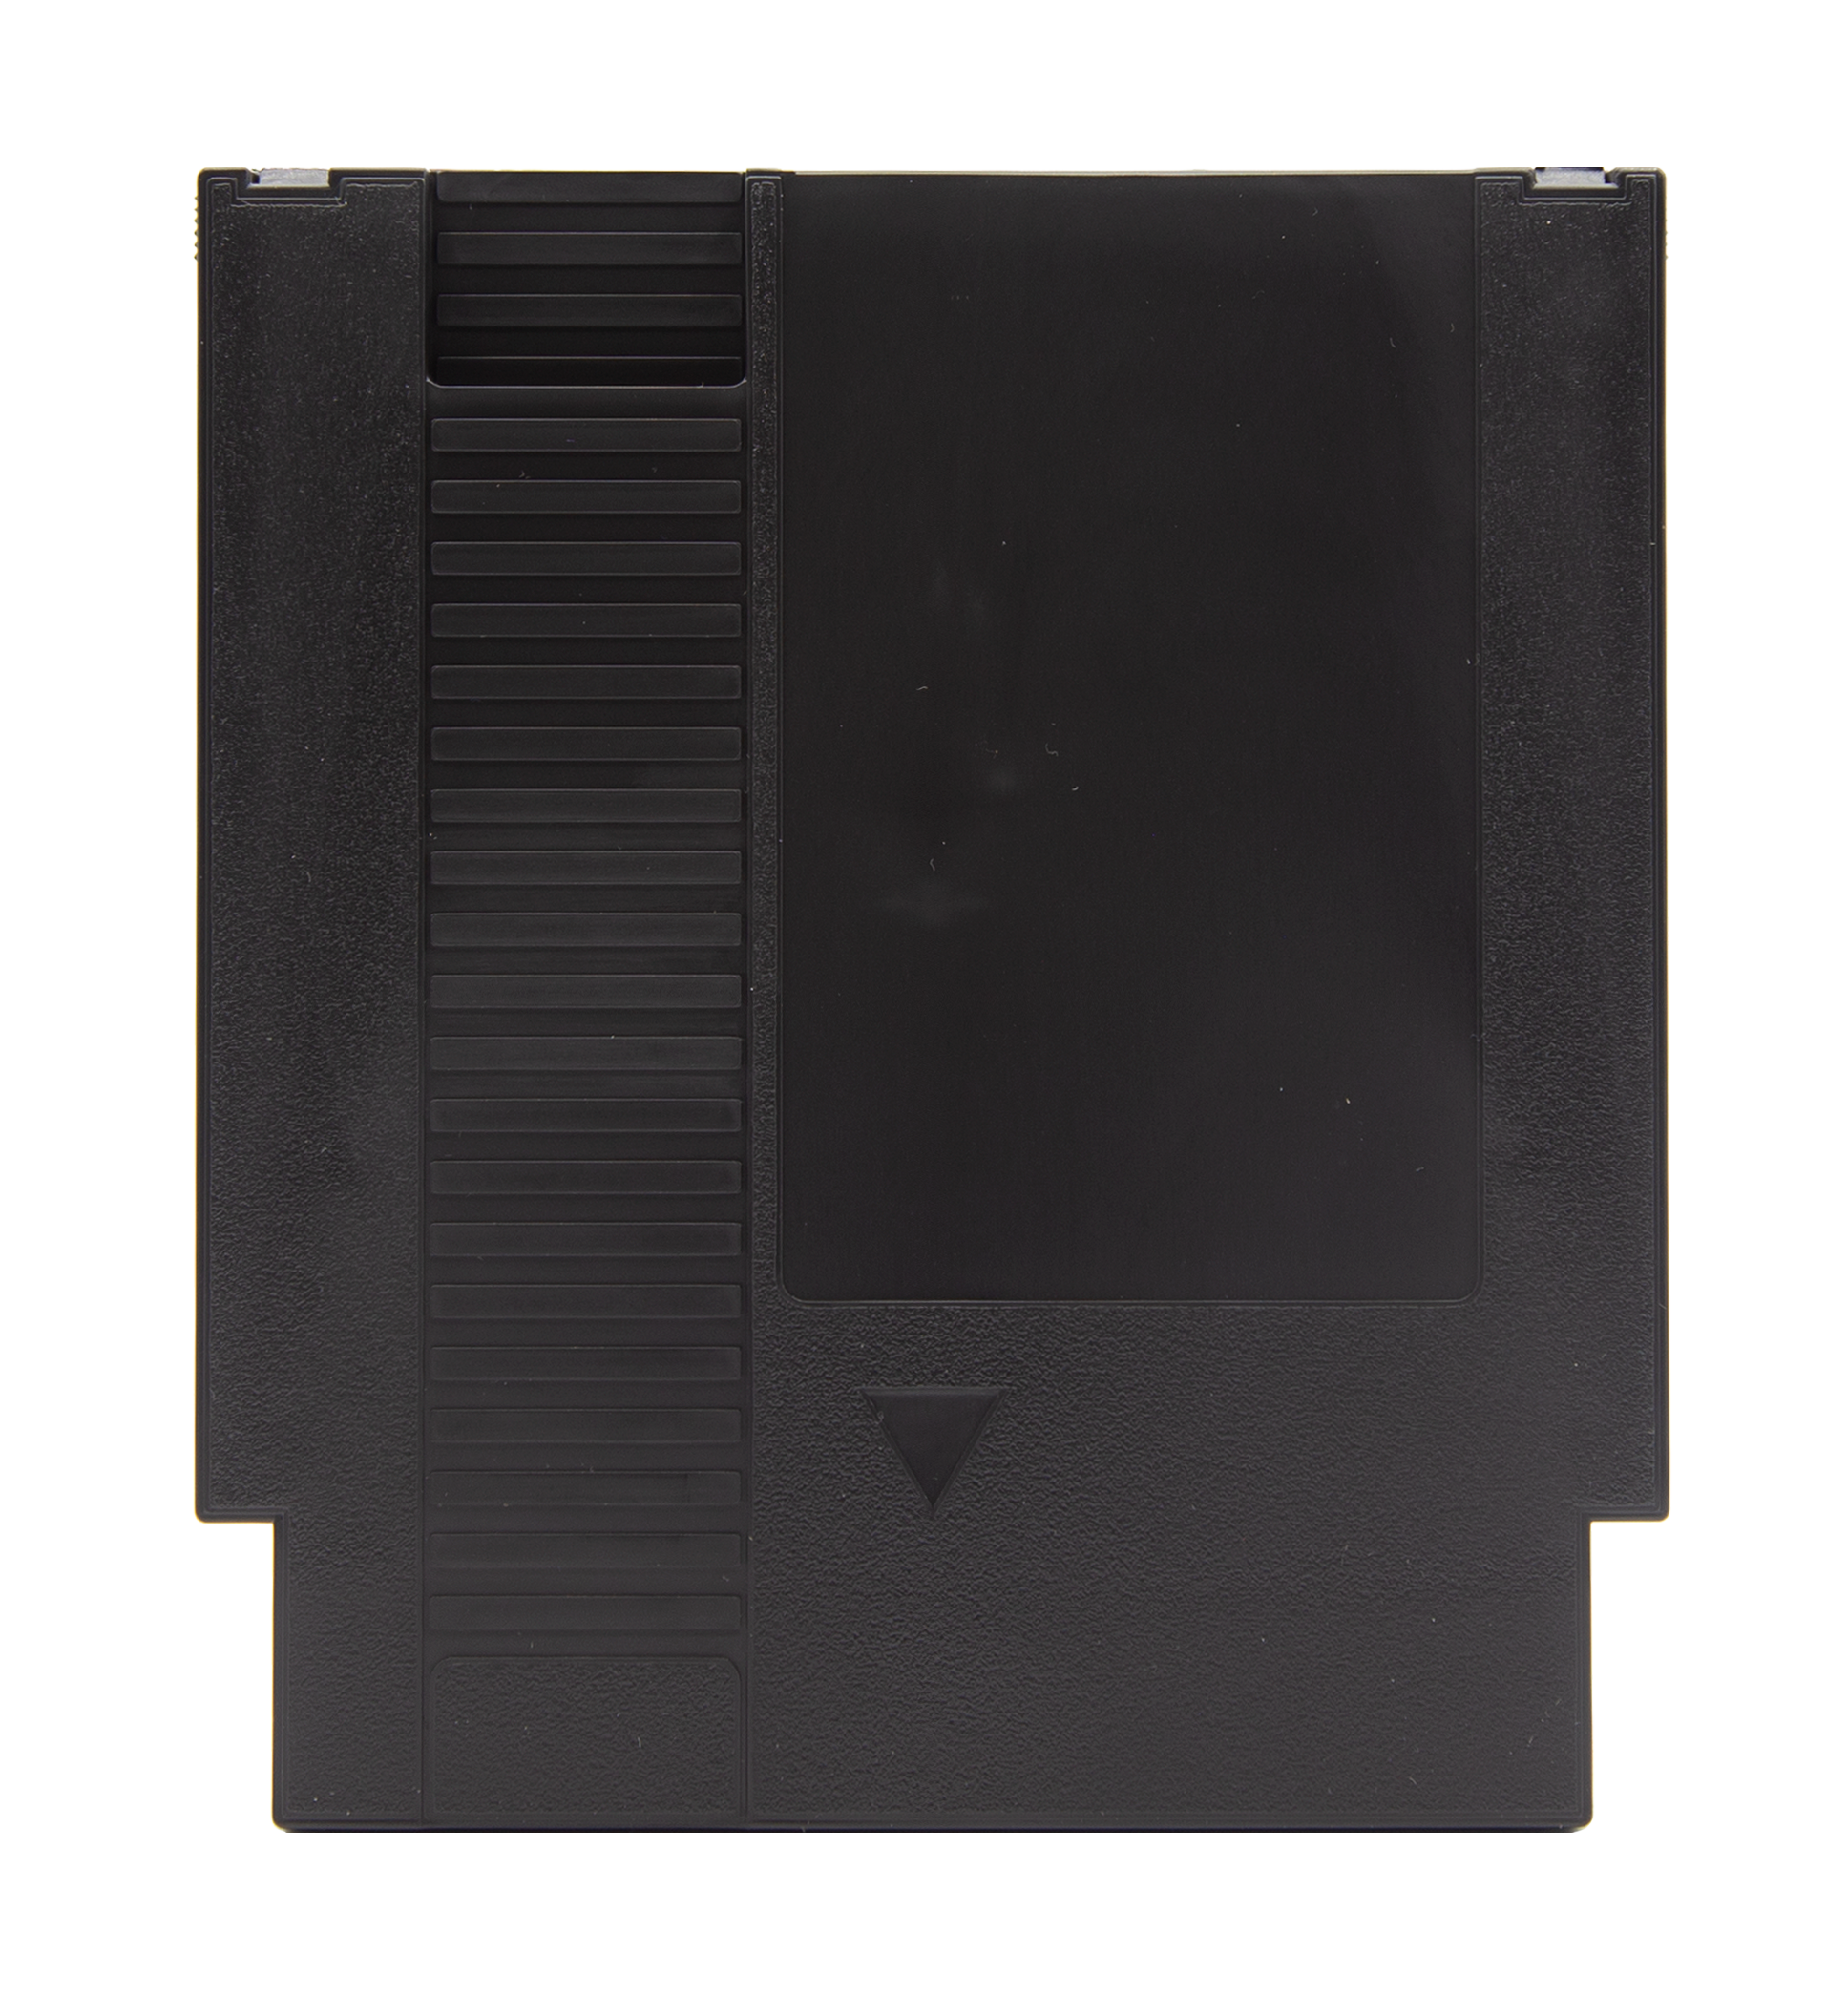 Black NES (Nintendo Entertainment System) Replacement Cartridge Shell